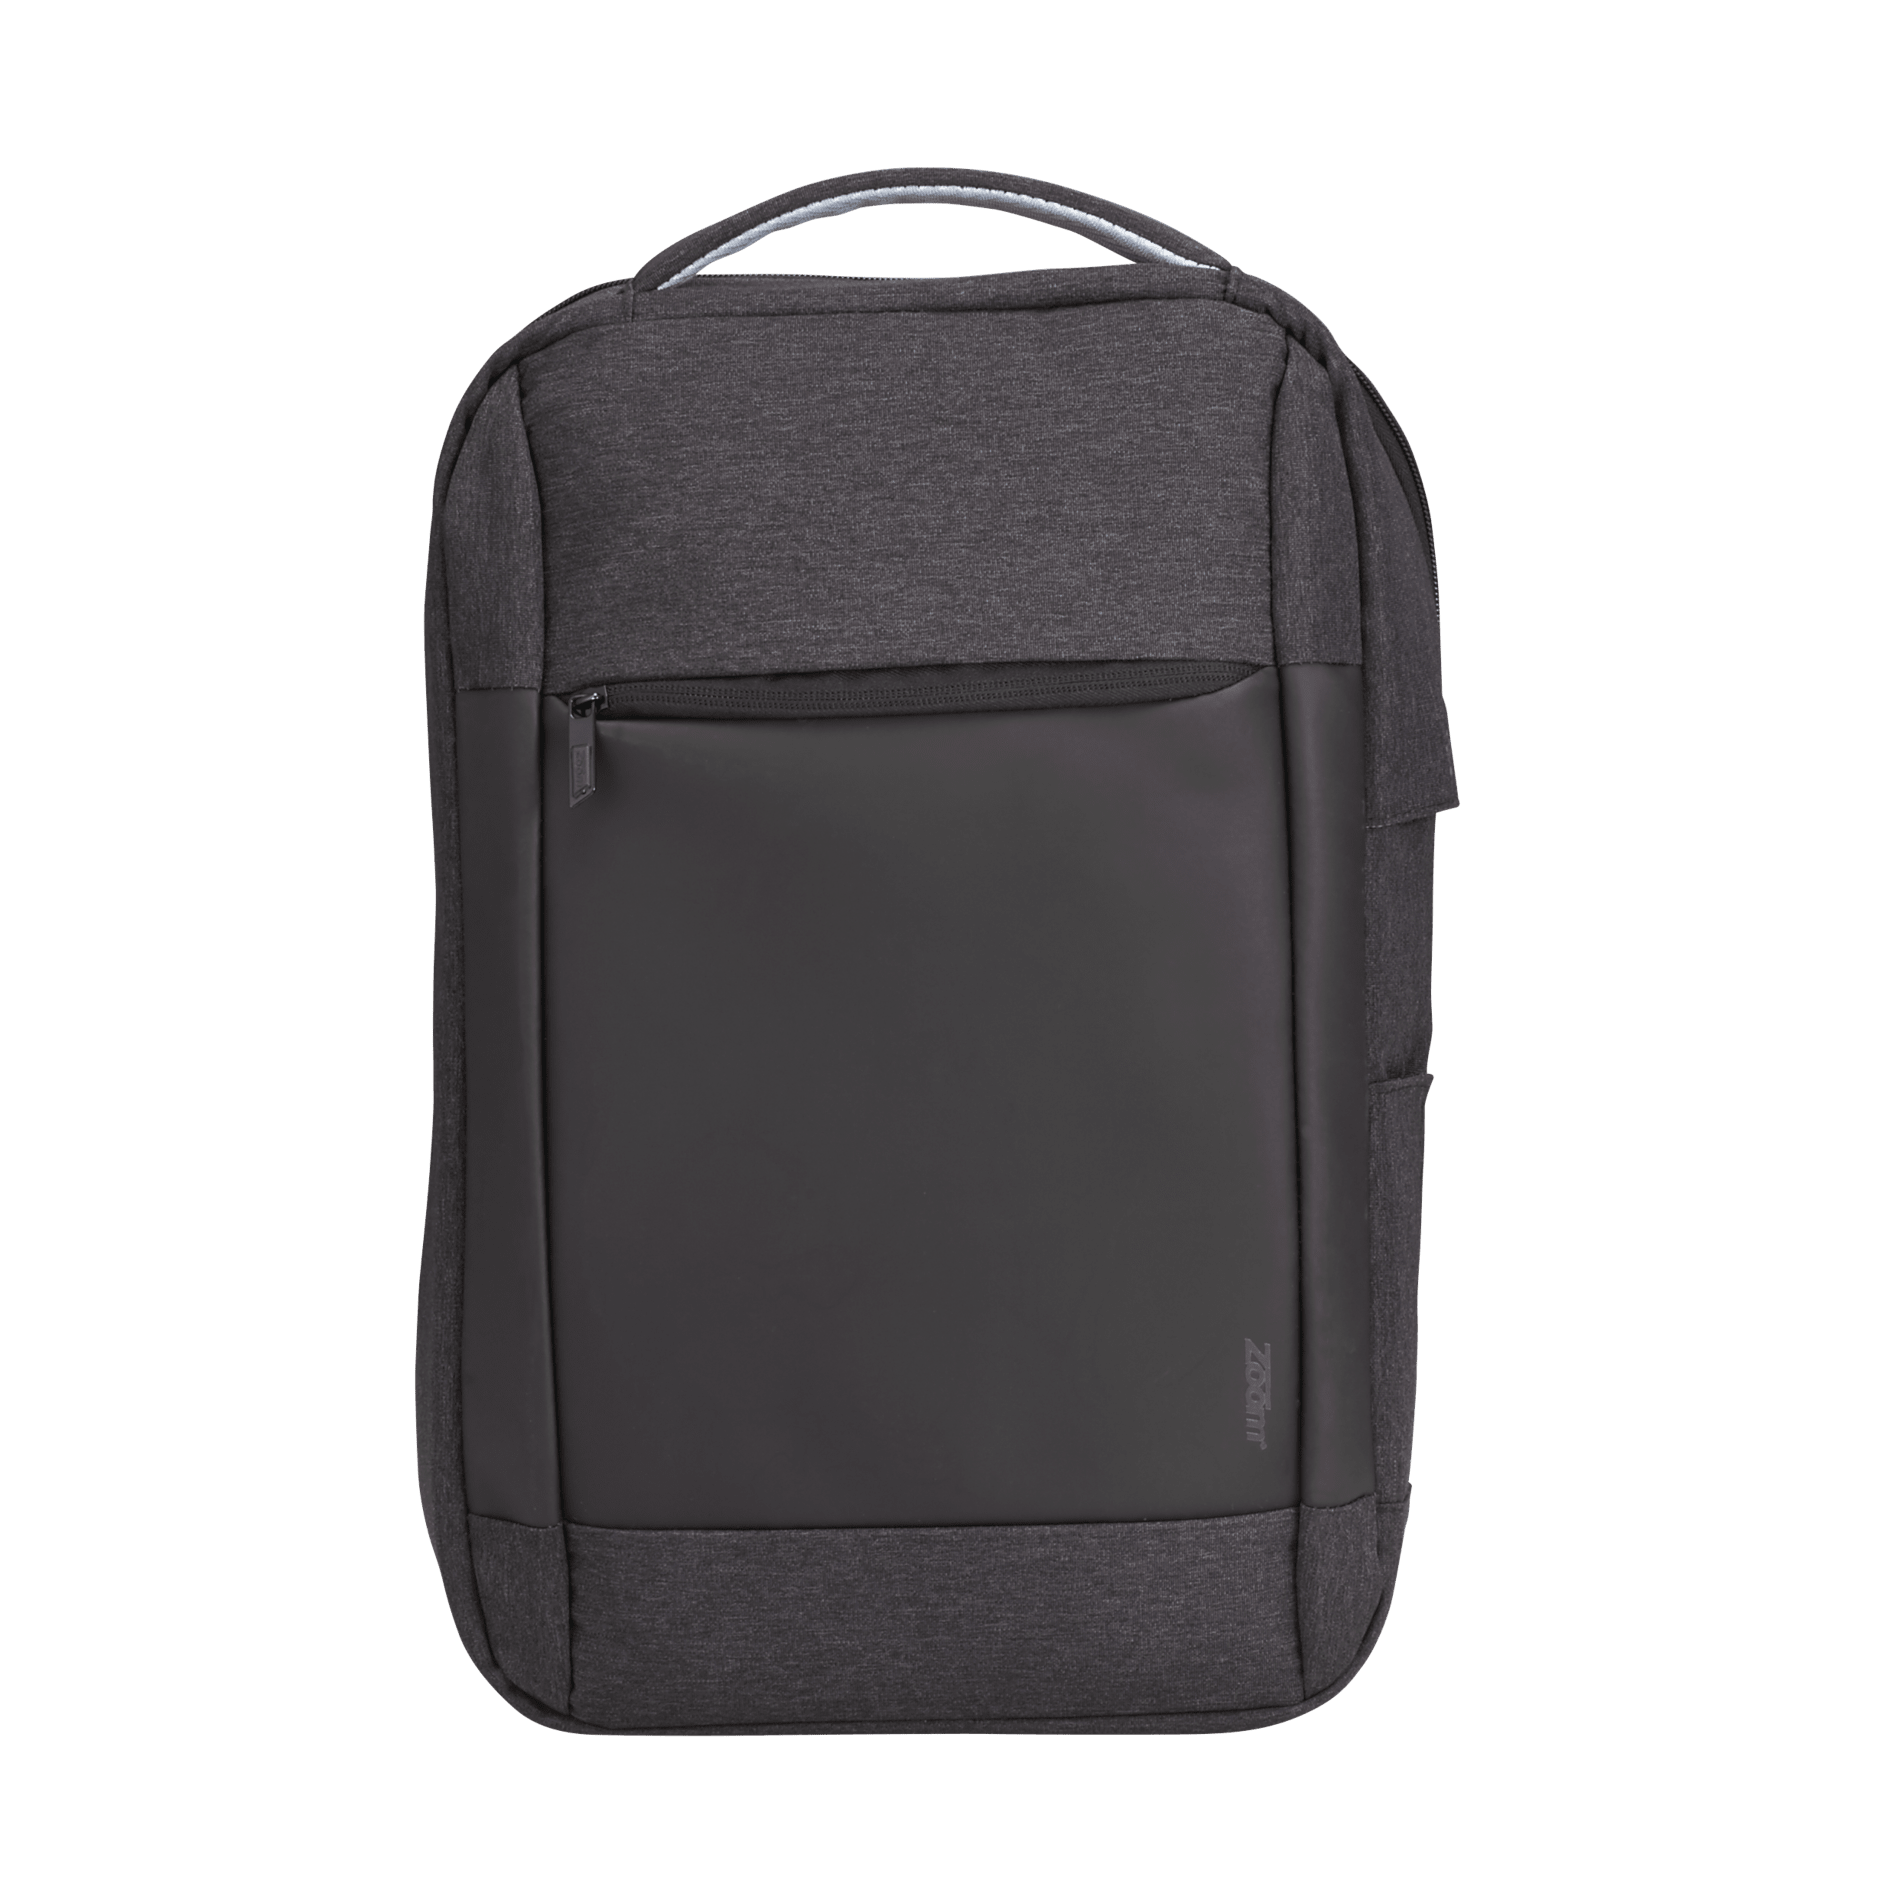 Zoom 0022-65 - Covert Security Slim 15" Computer Backpack